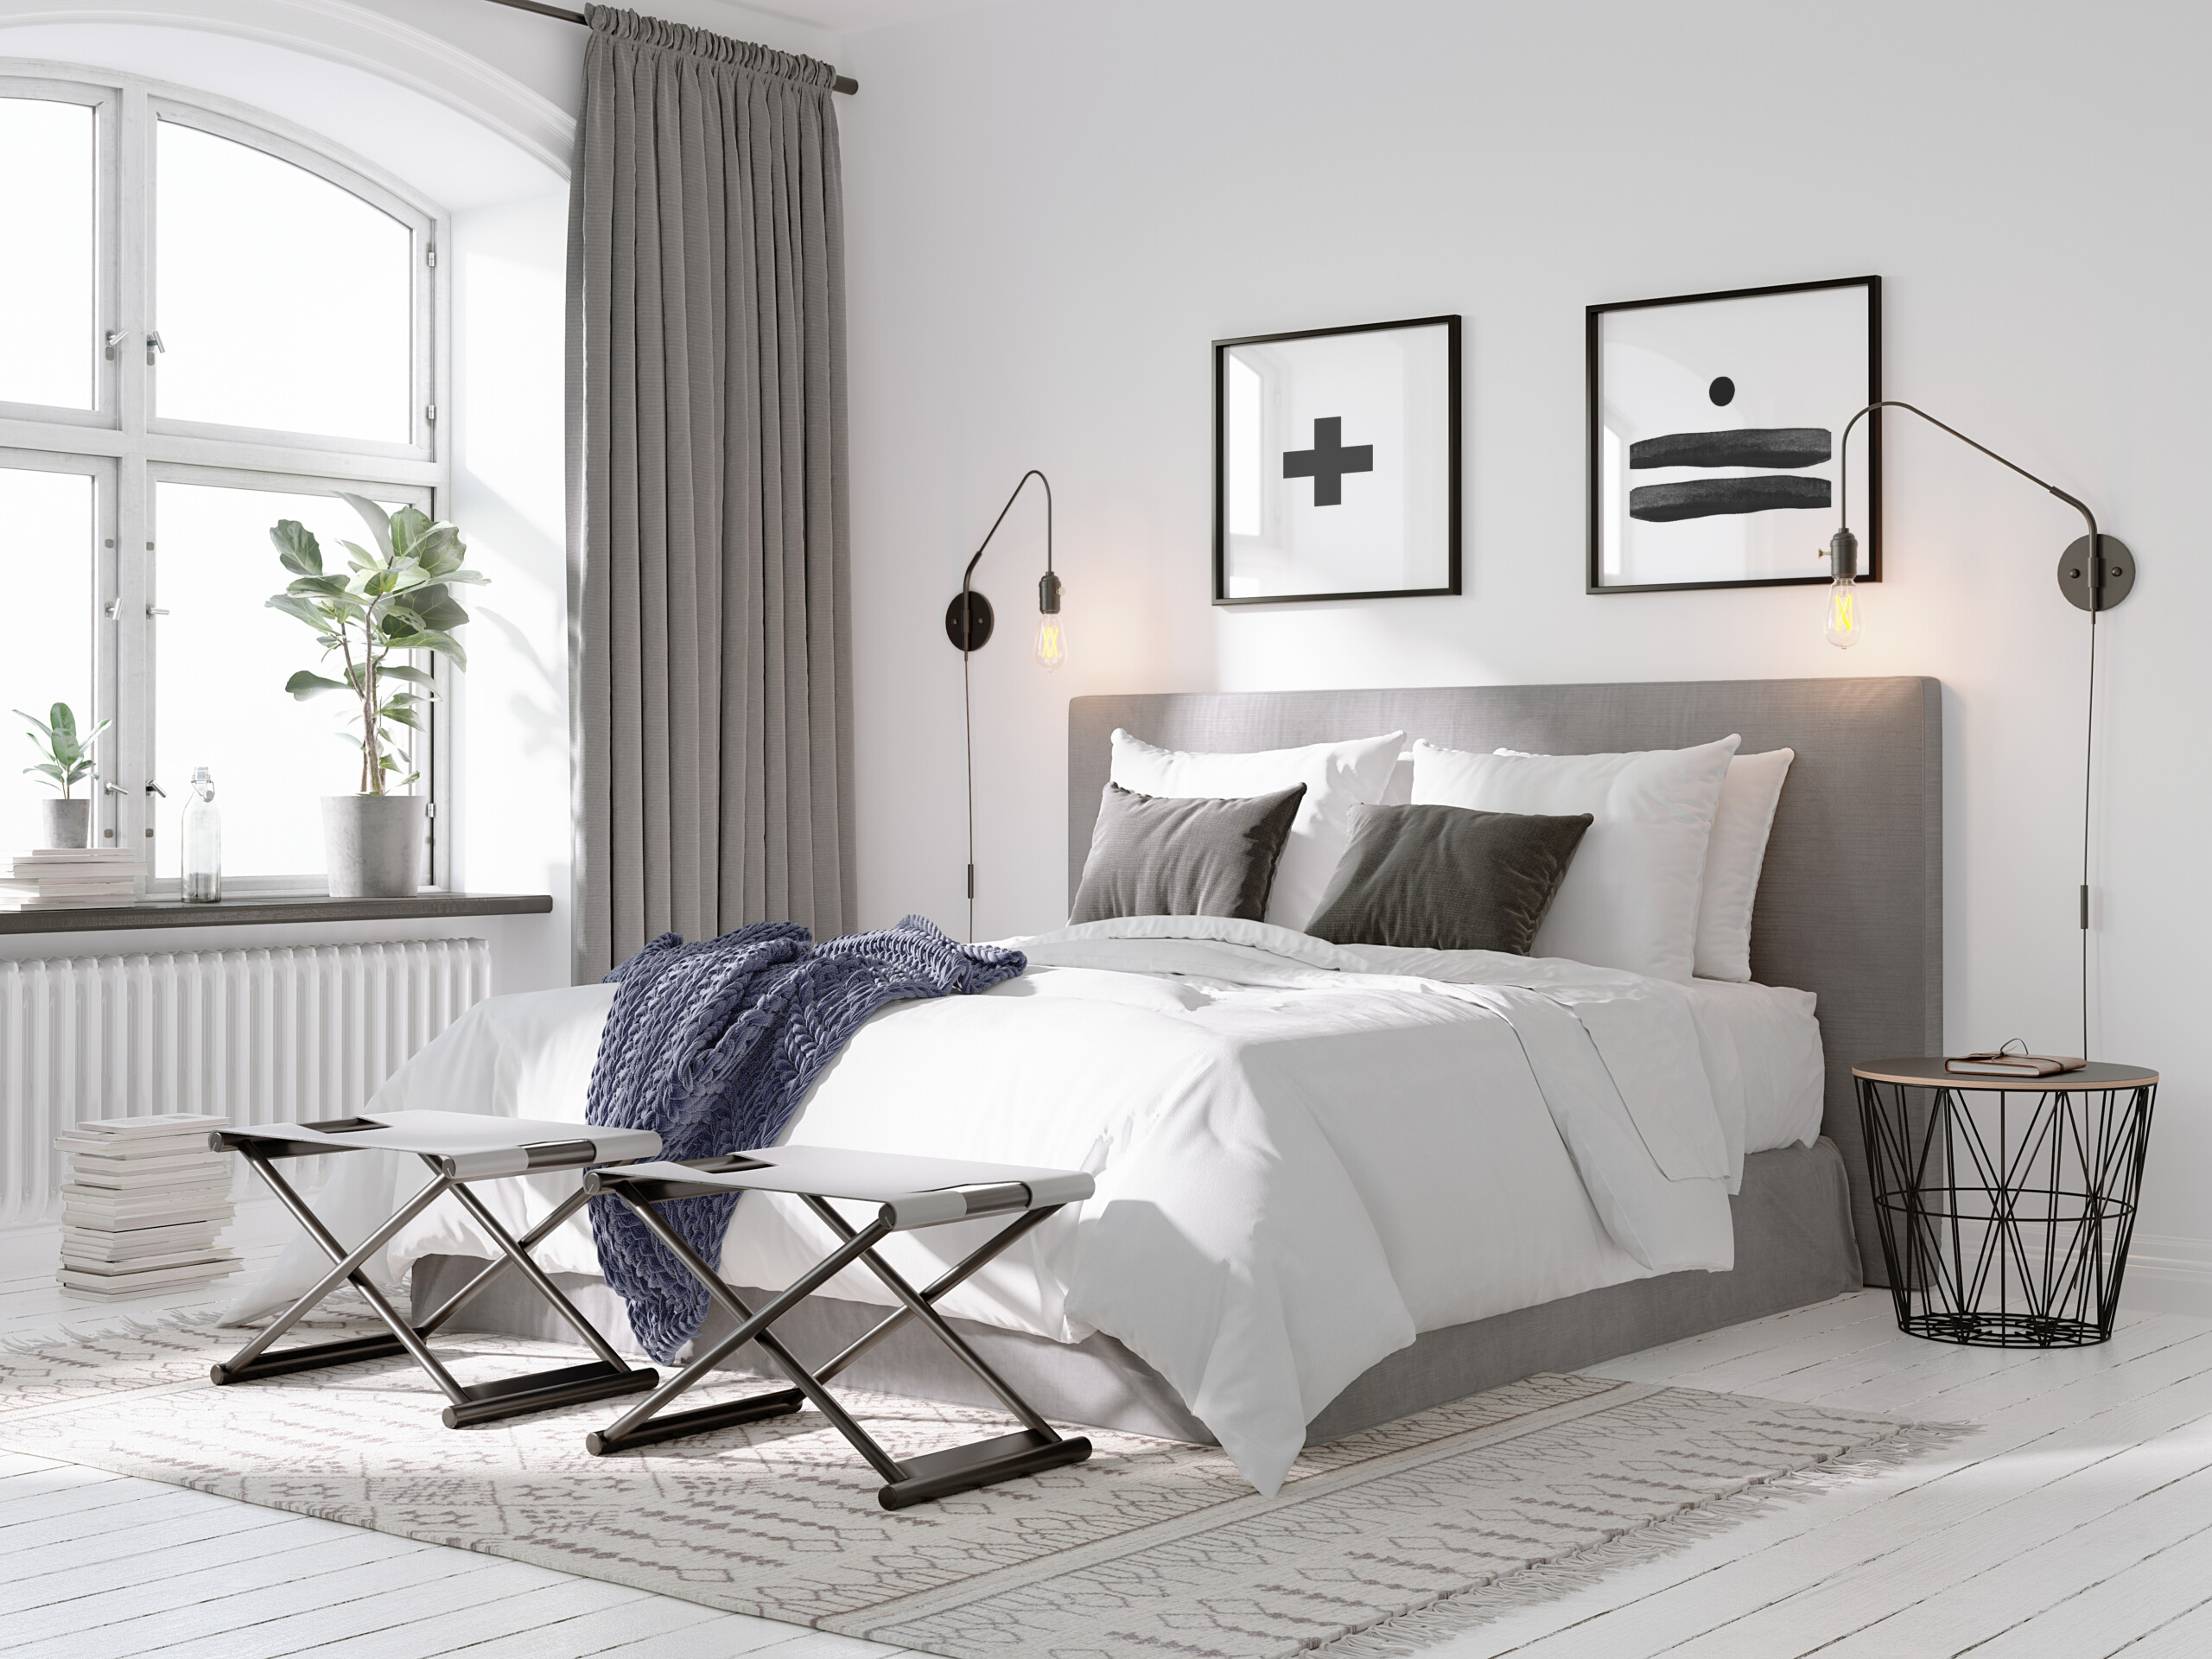 https://www.decoraid.com/wp-content/uploads/2021/04/bedroom-interior-design-scaled.jpeg